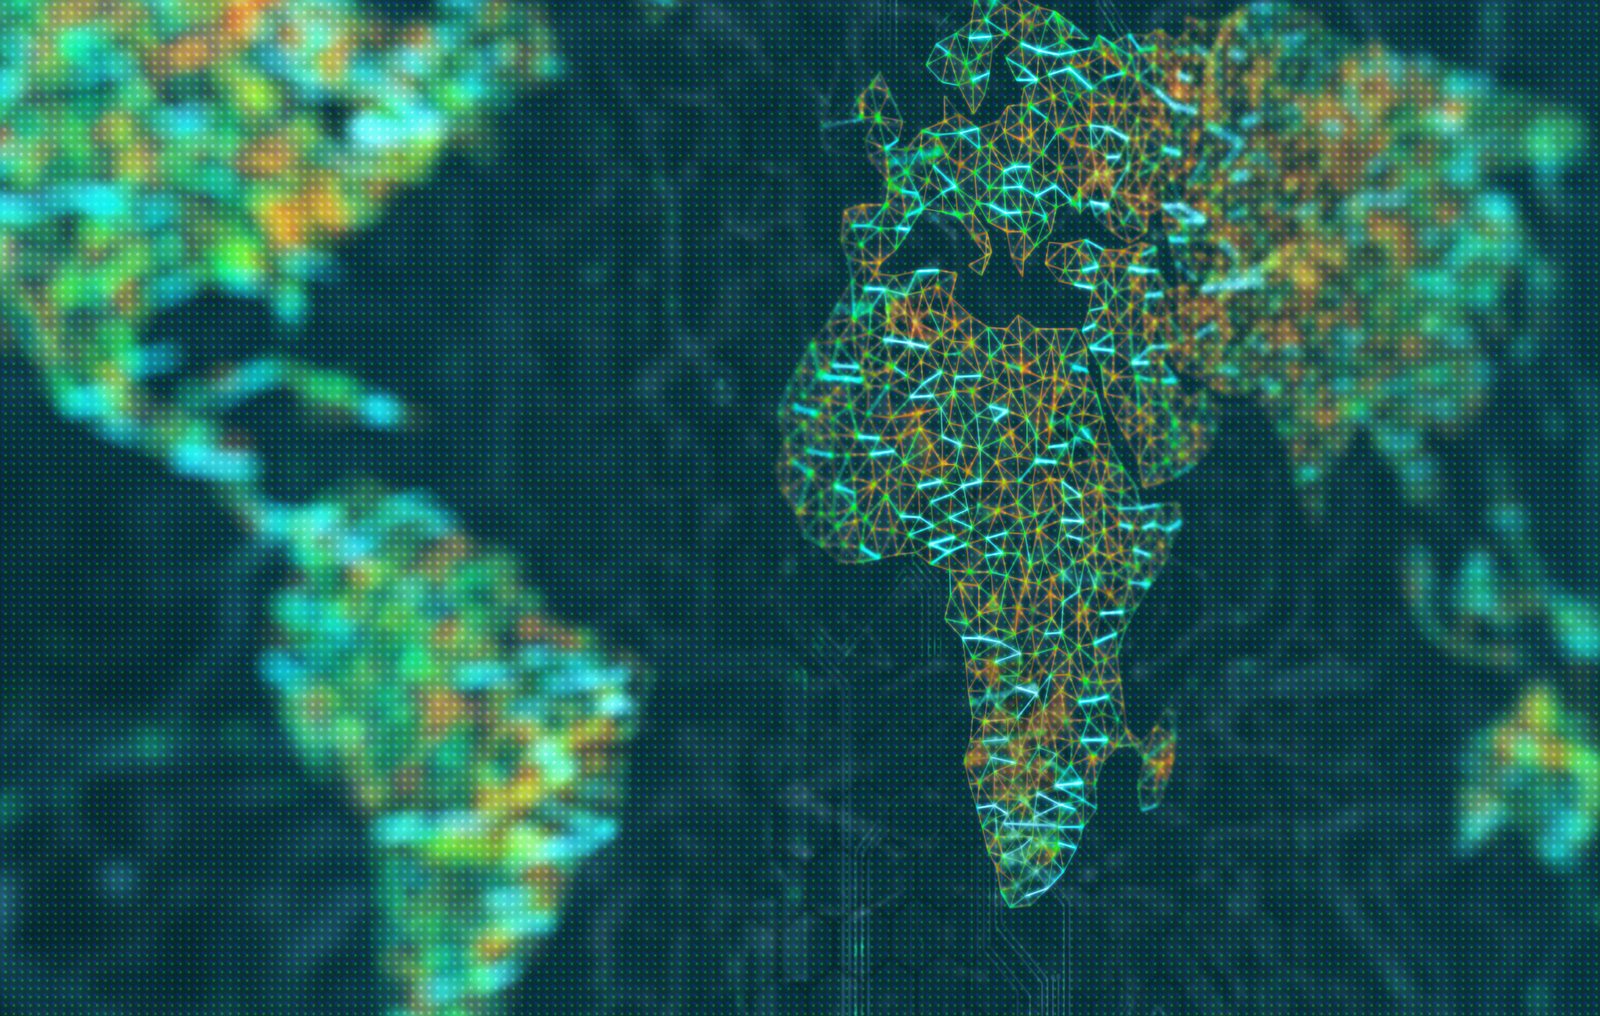 Study: Africa Cybersecurity Improves but Lacks Cross-Border Frameworks – Source: www.darkreading.com